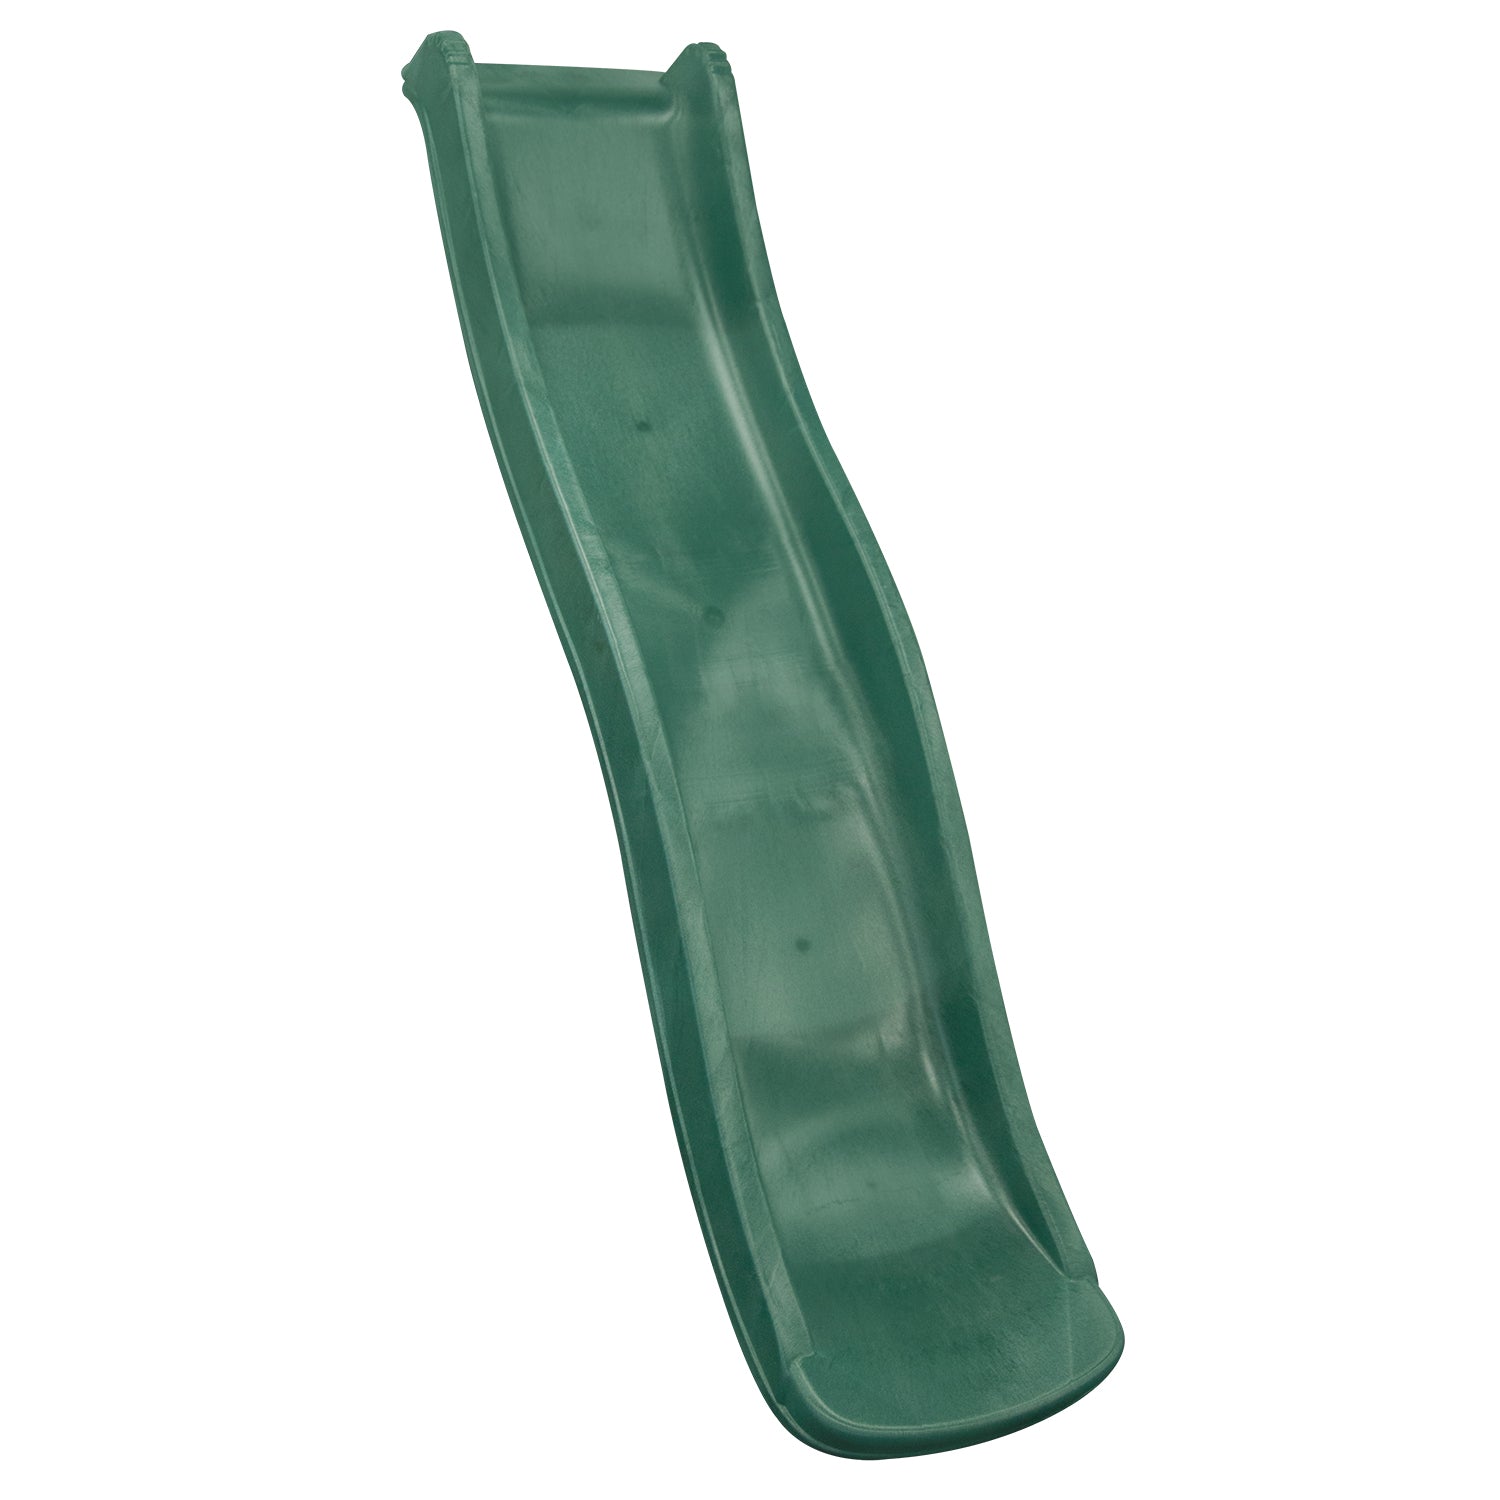 Lifespan Kids 1.8m Slide - Green